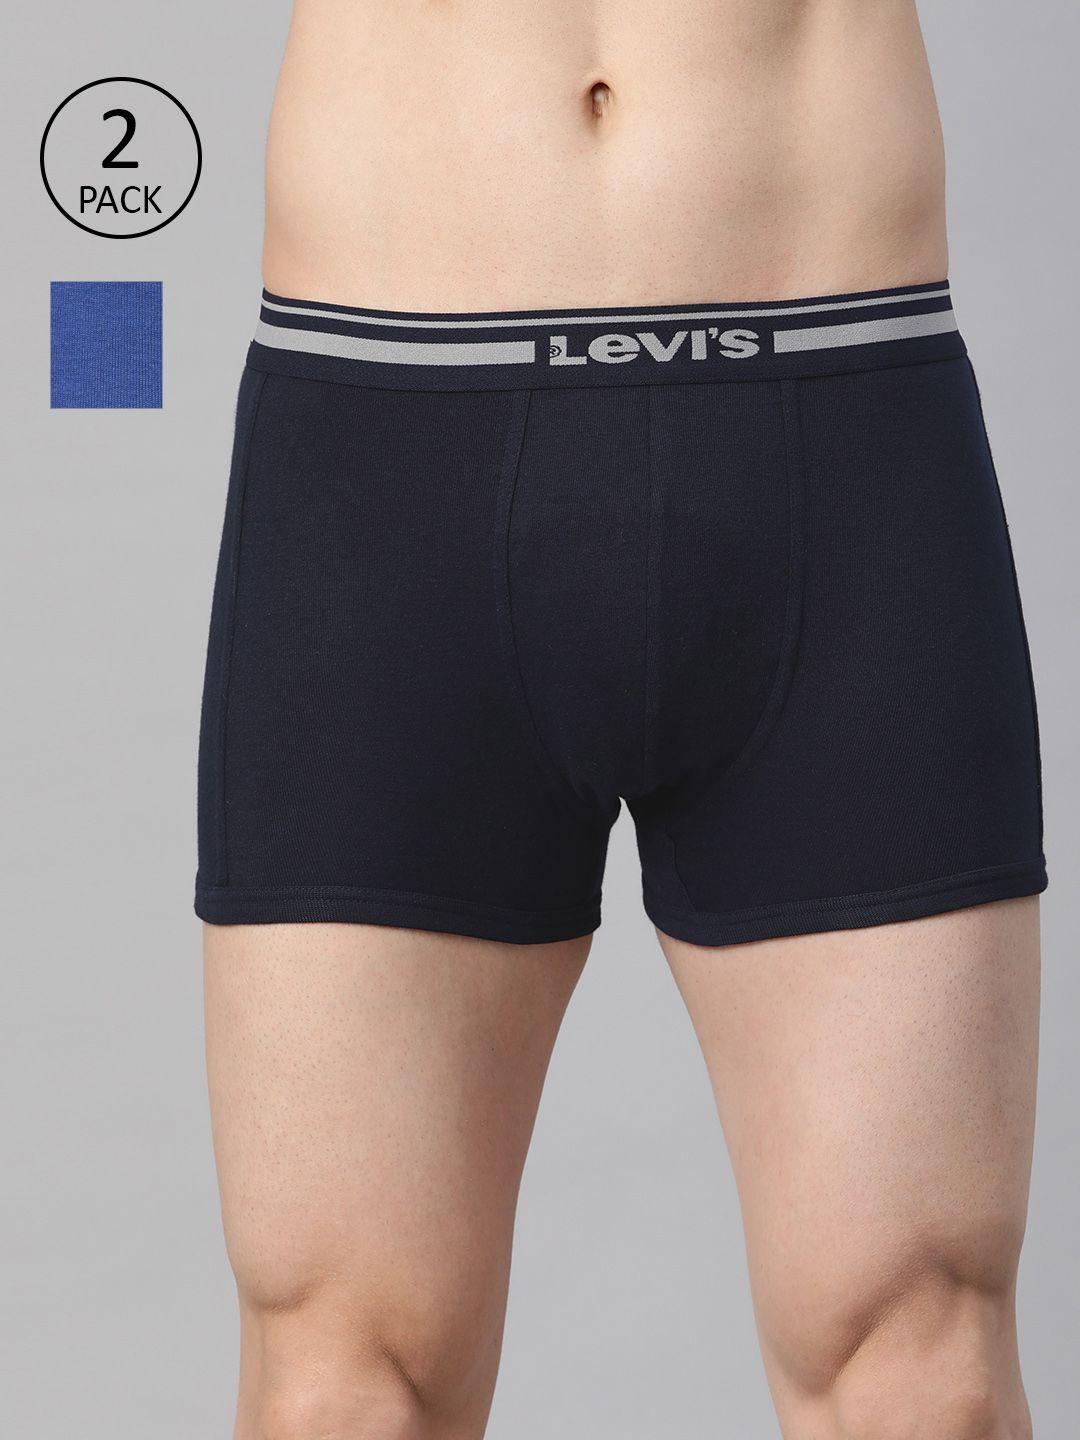 levis-men-pack-of-2-assorted-solid-trunks-#003